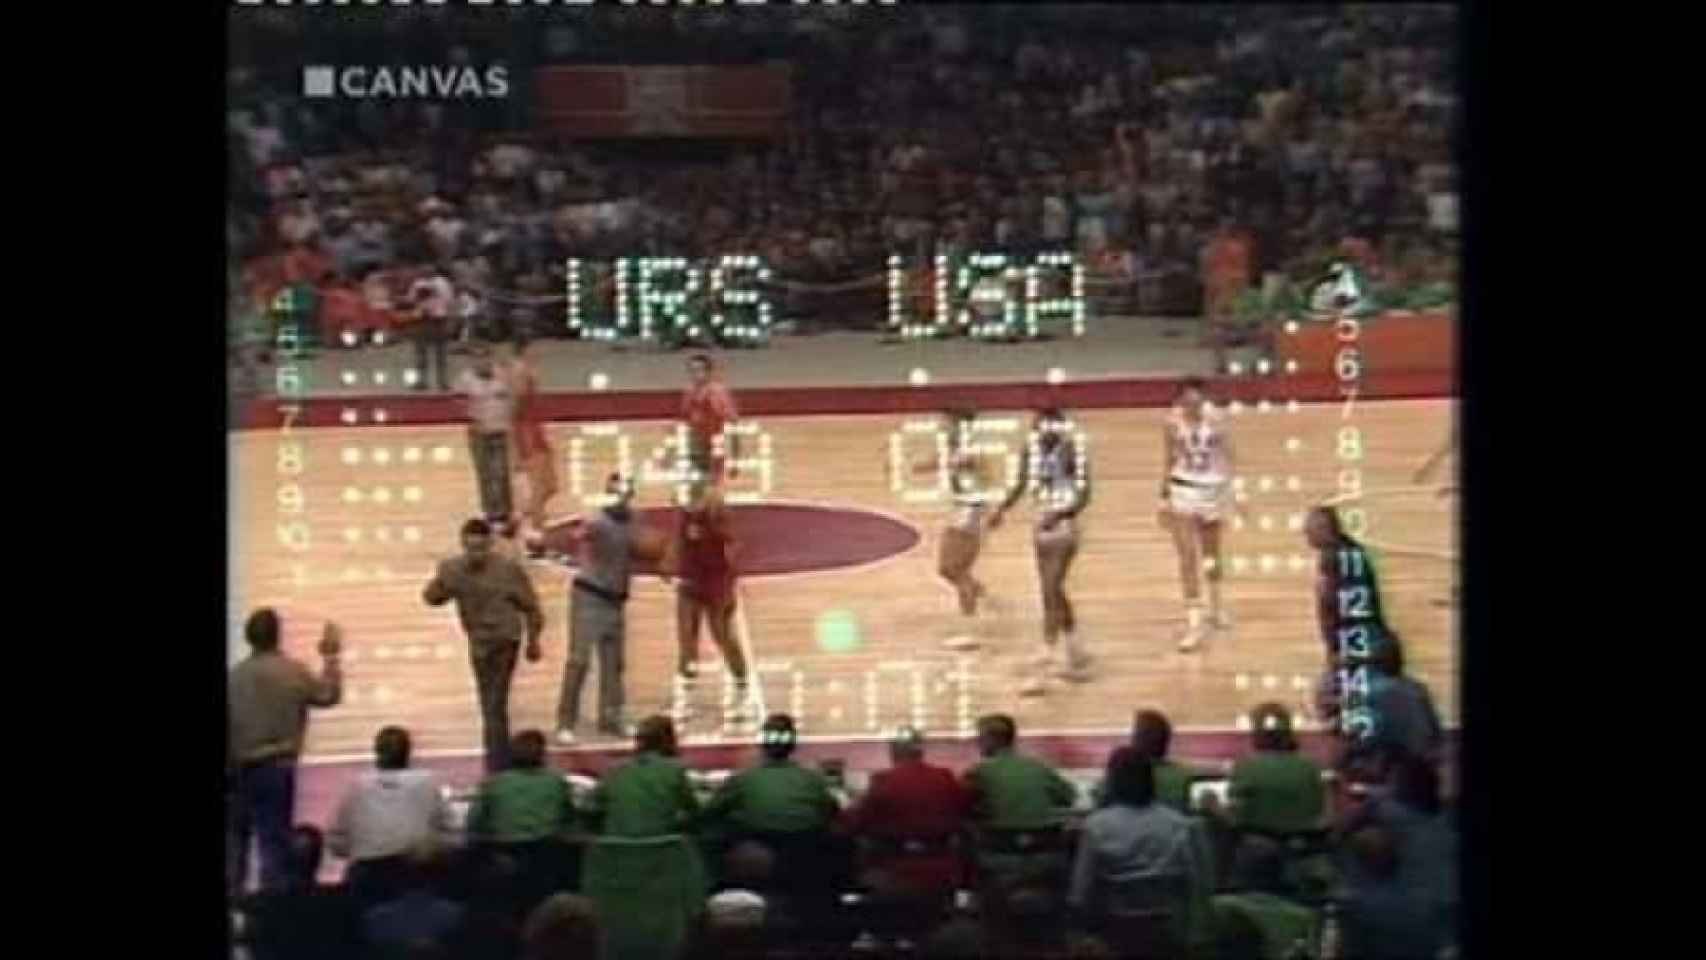 Игры 1972 баскетбол. Баскетбол 1972 финал СССР США. Мюнхен 1972 (СССР - США). Баскетбол Мюнхен 1972 СССР США. Матч СССР США по баскетболу 1972.